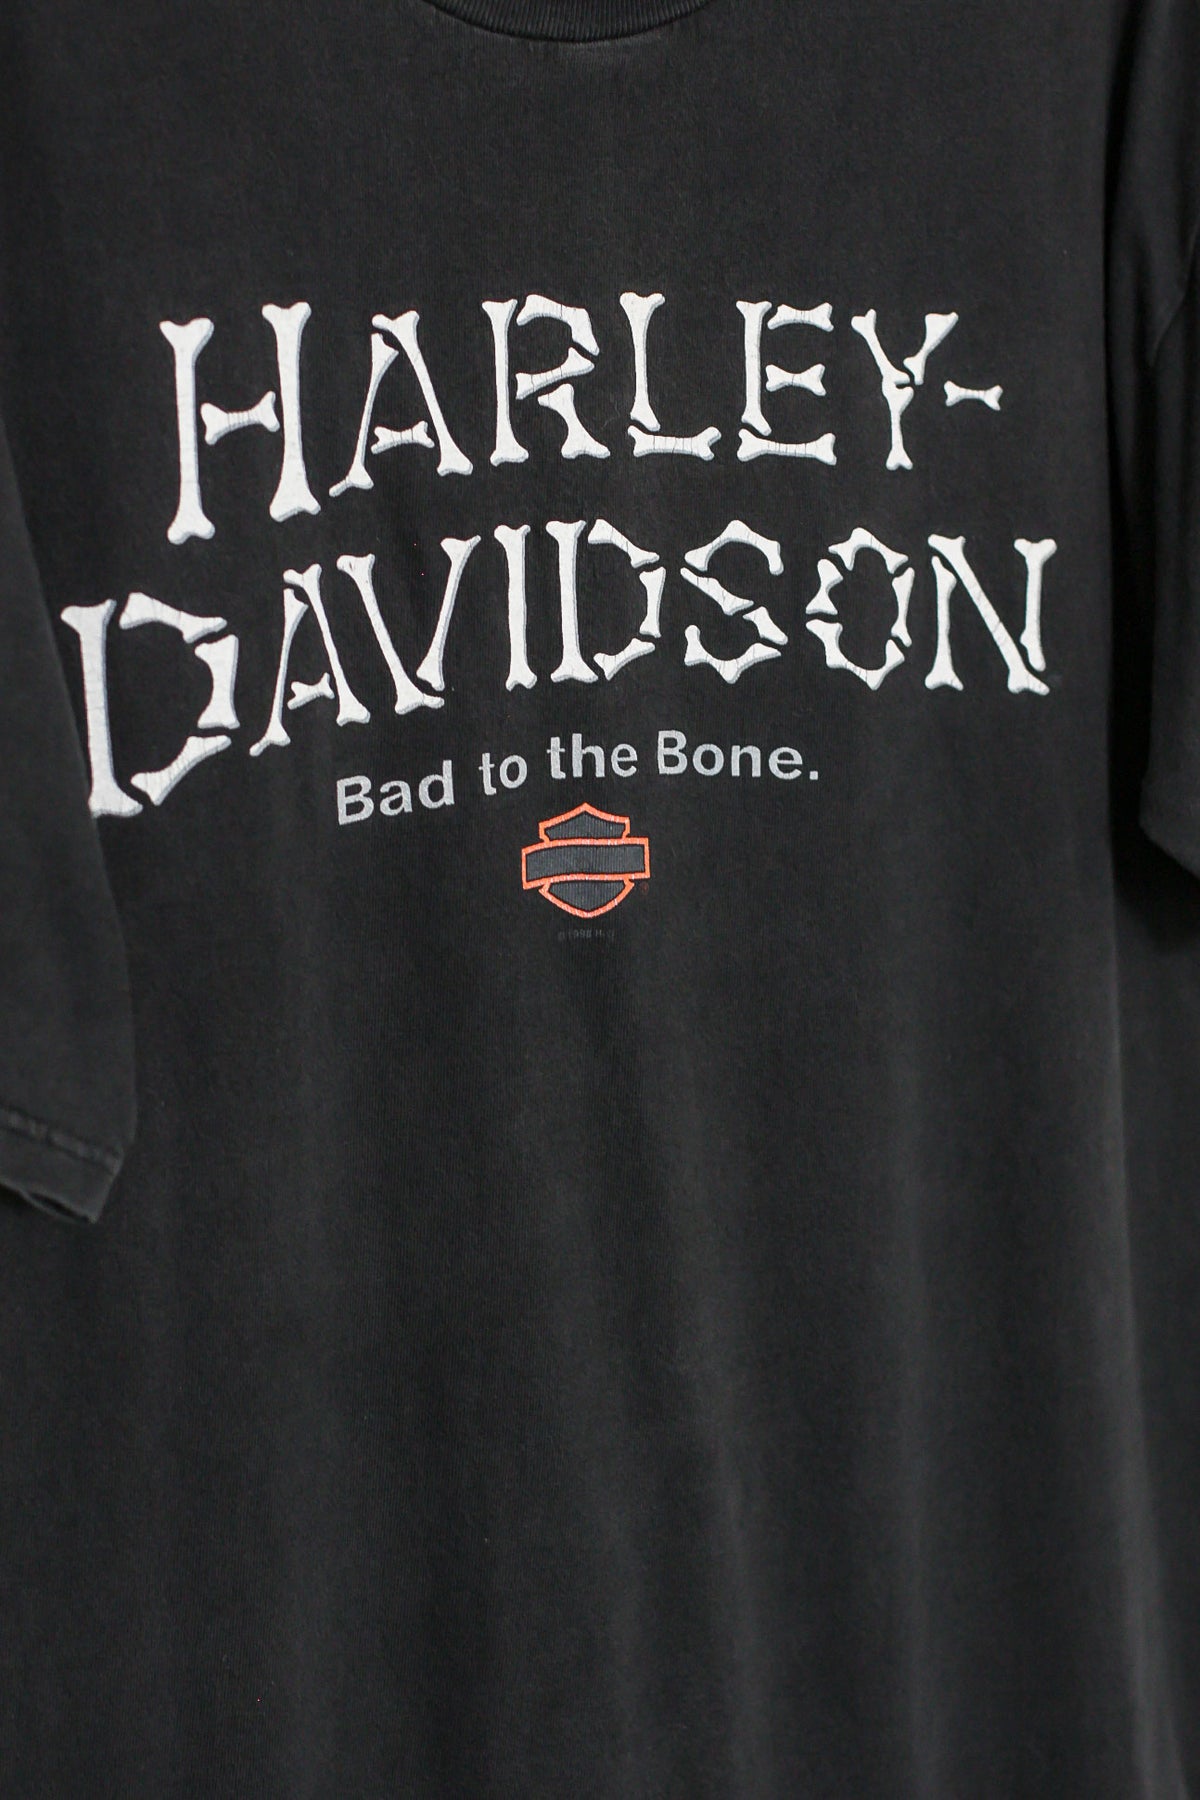 1998 Harley Davidson Tee (L)